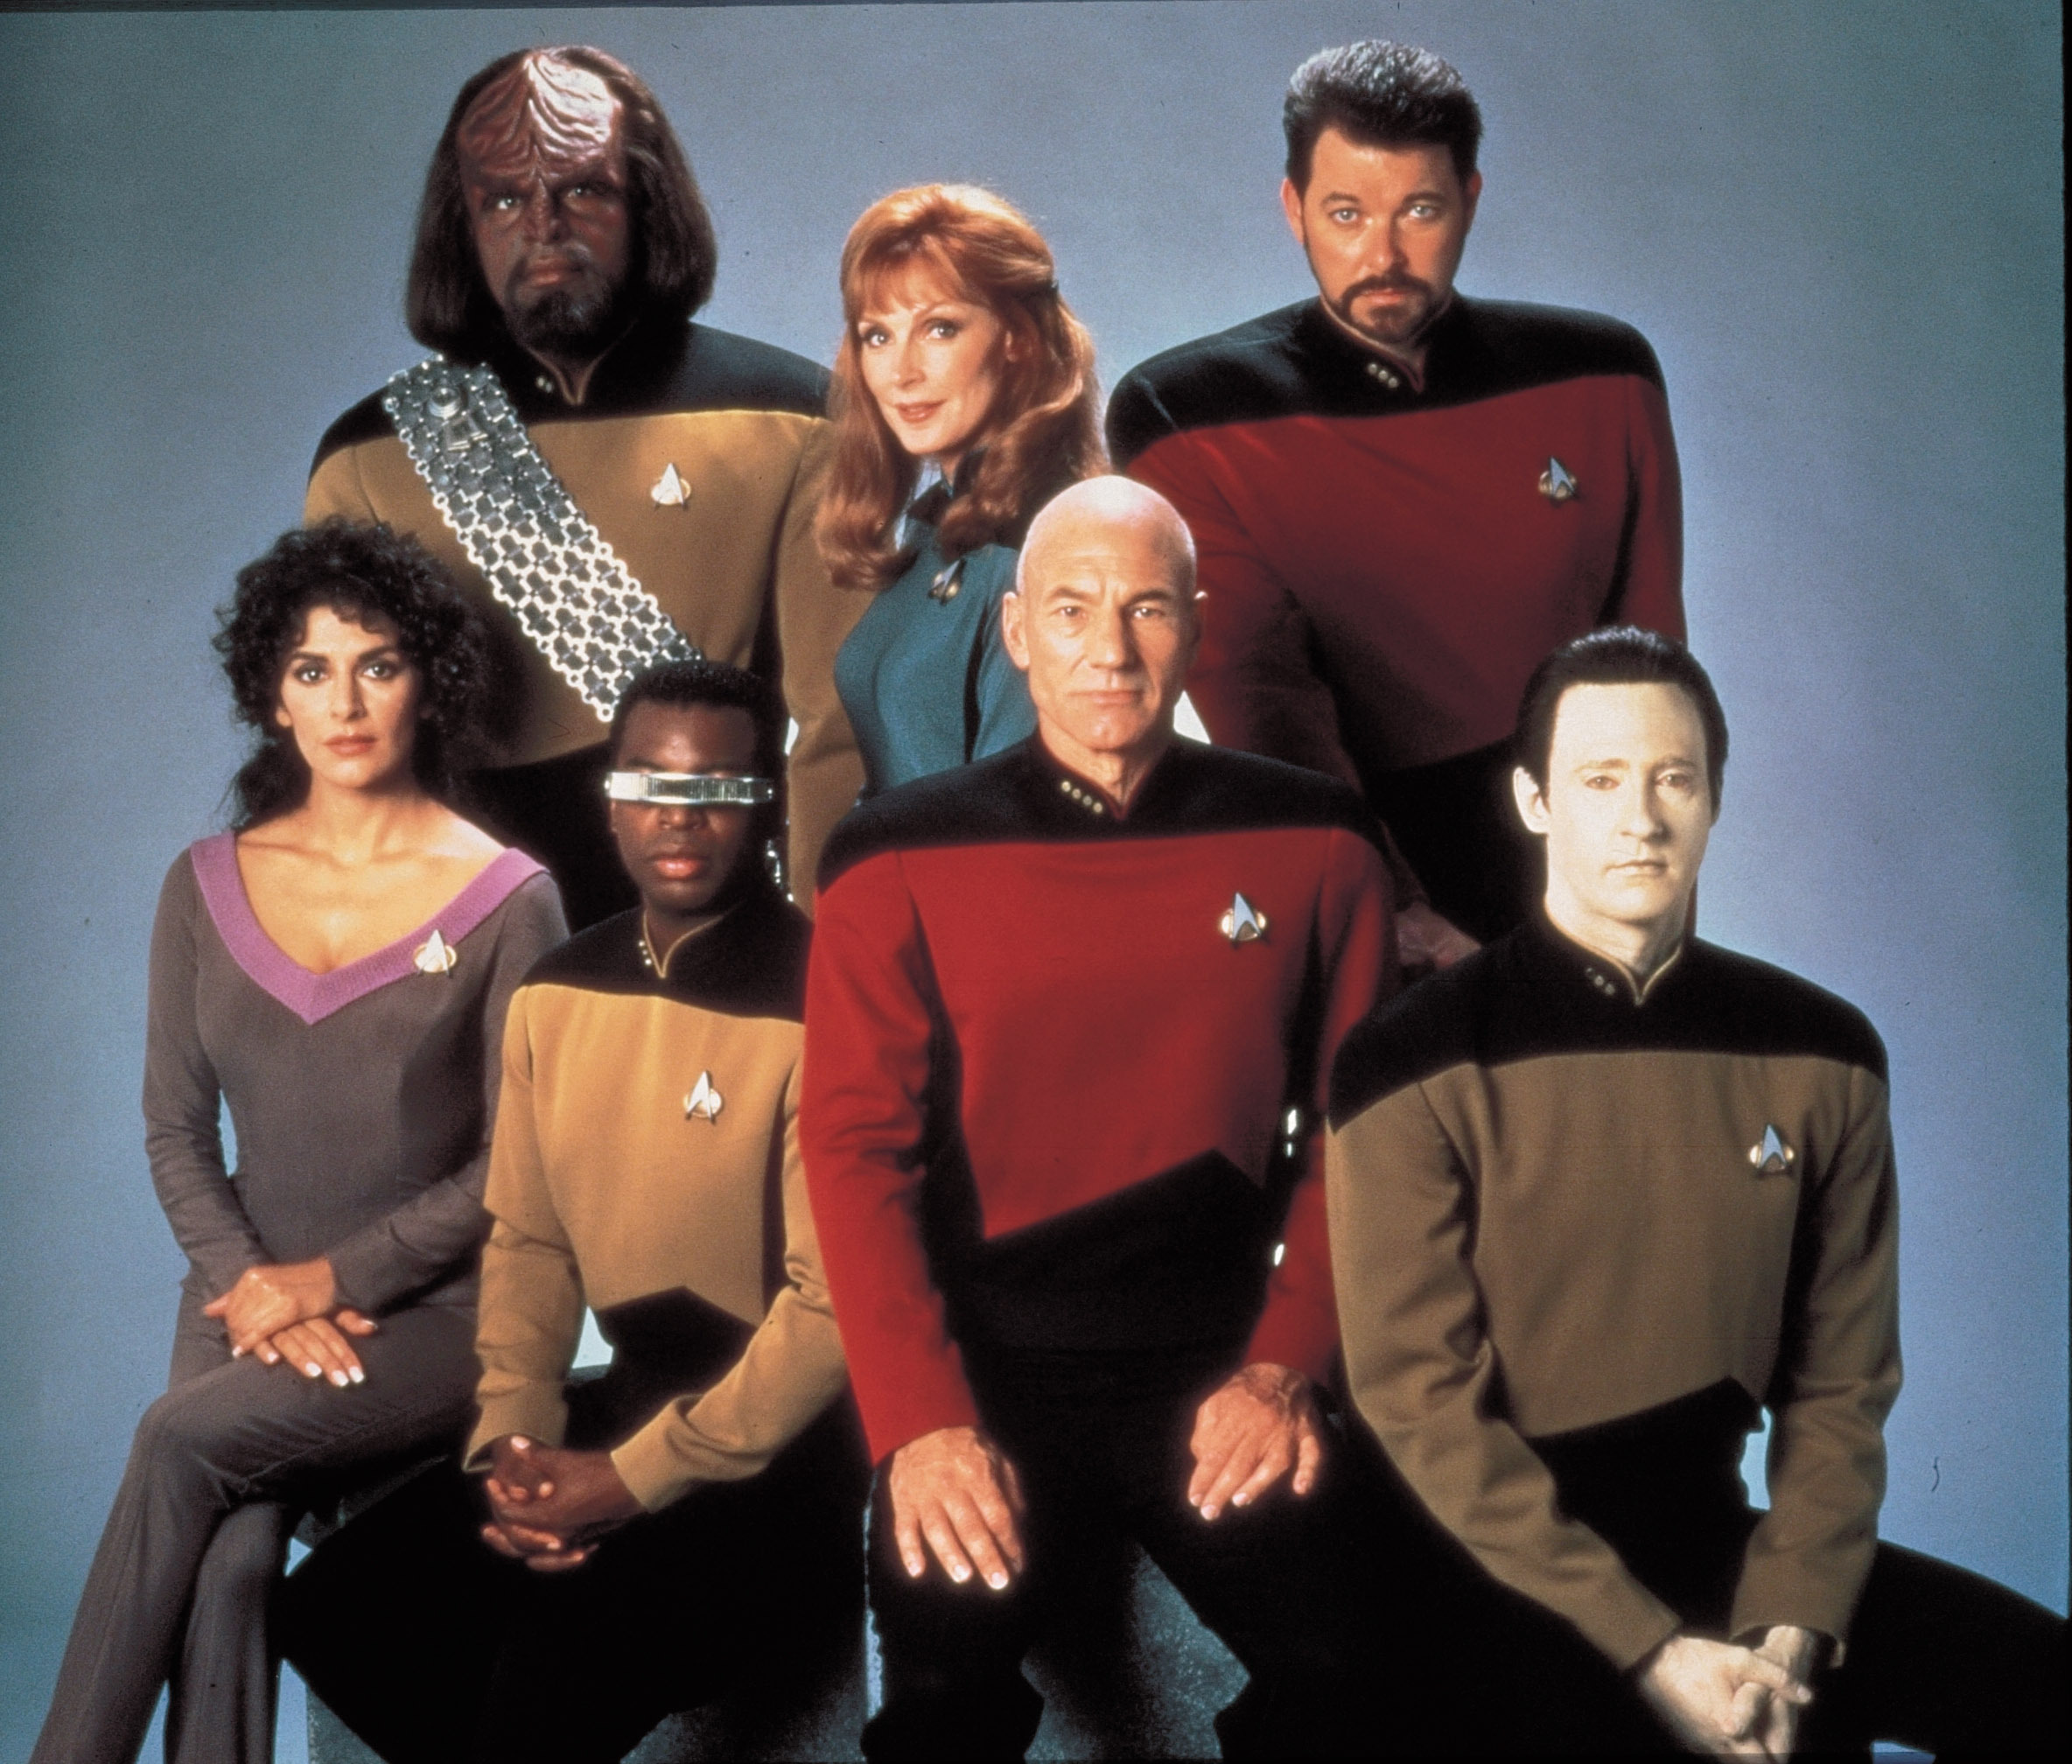 Star Trek: The Next Generation #6